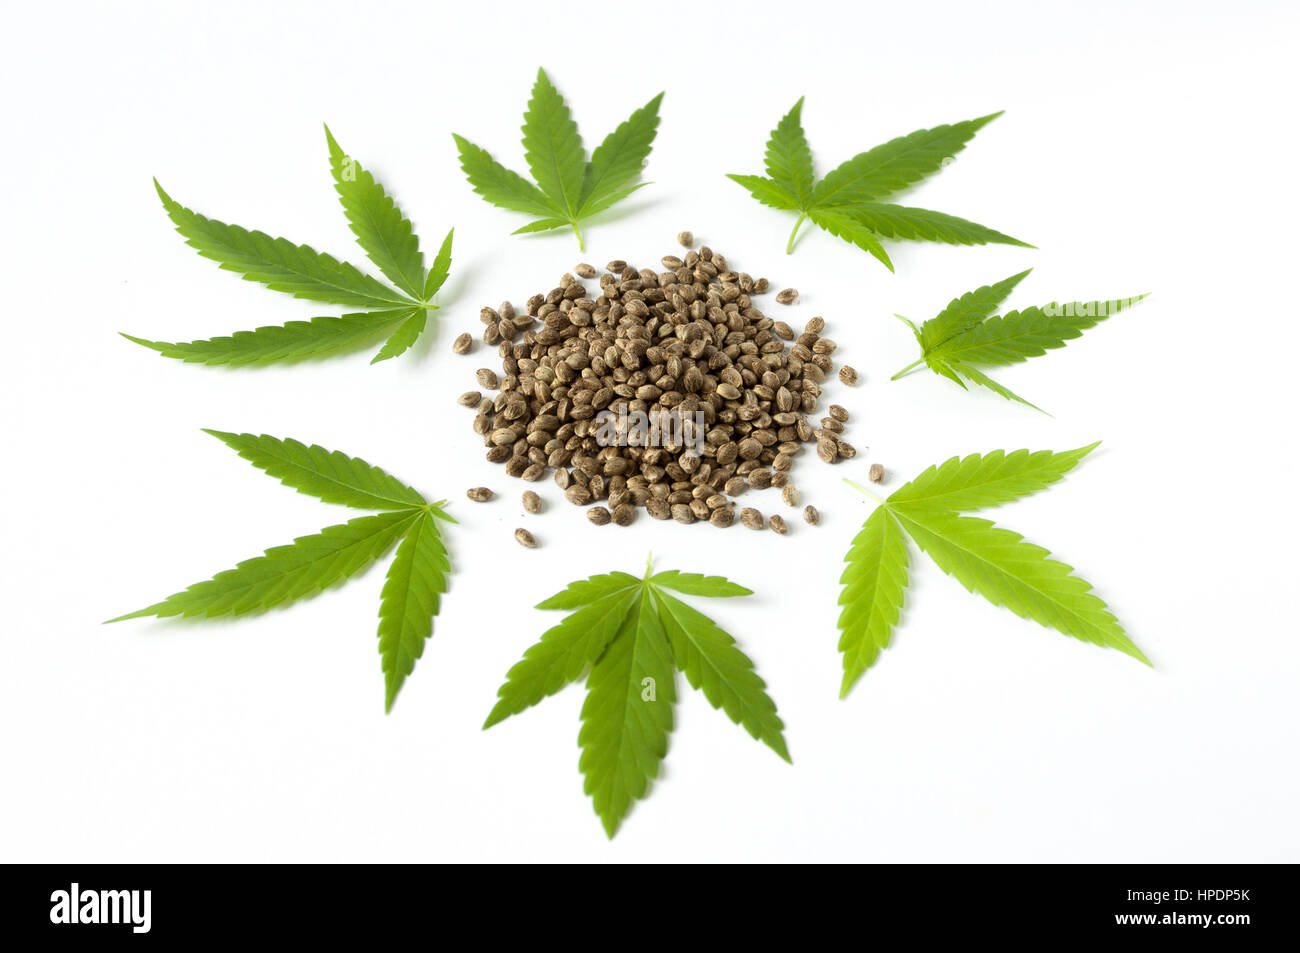 cannabis marijunana green leaves raw seed detail Stock Photo